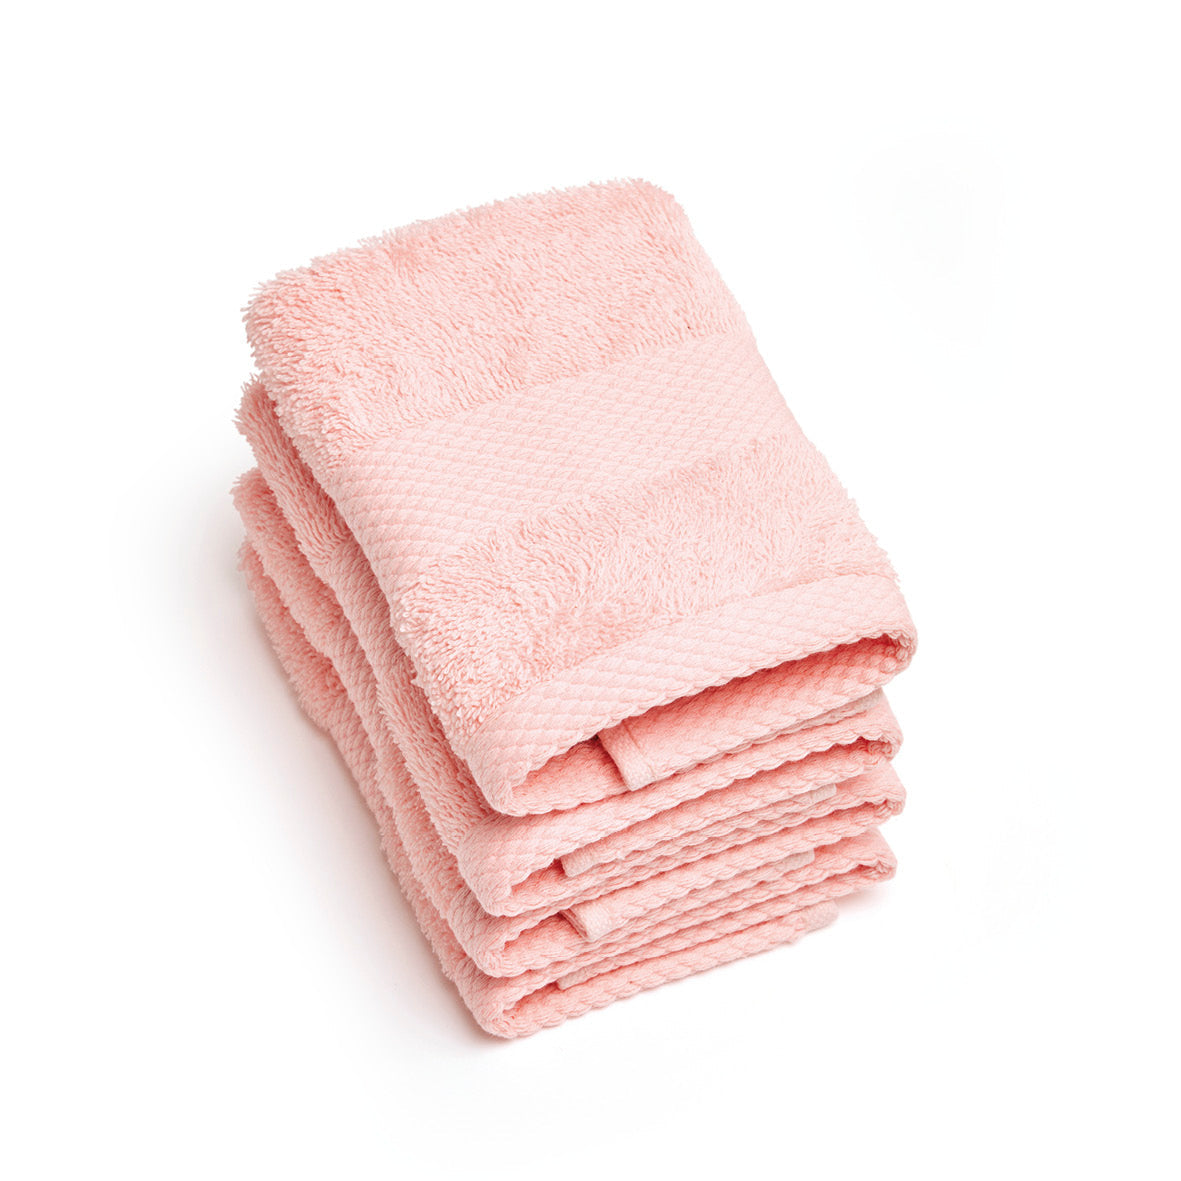 Set of 4 guest towels - 4 x (30 x 30 cm)